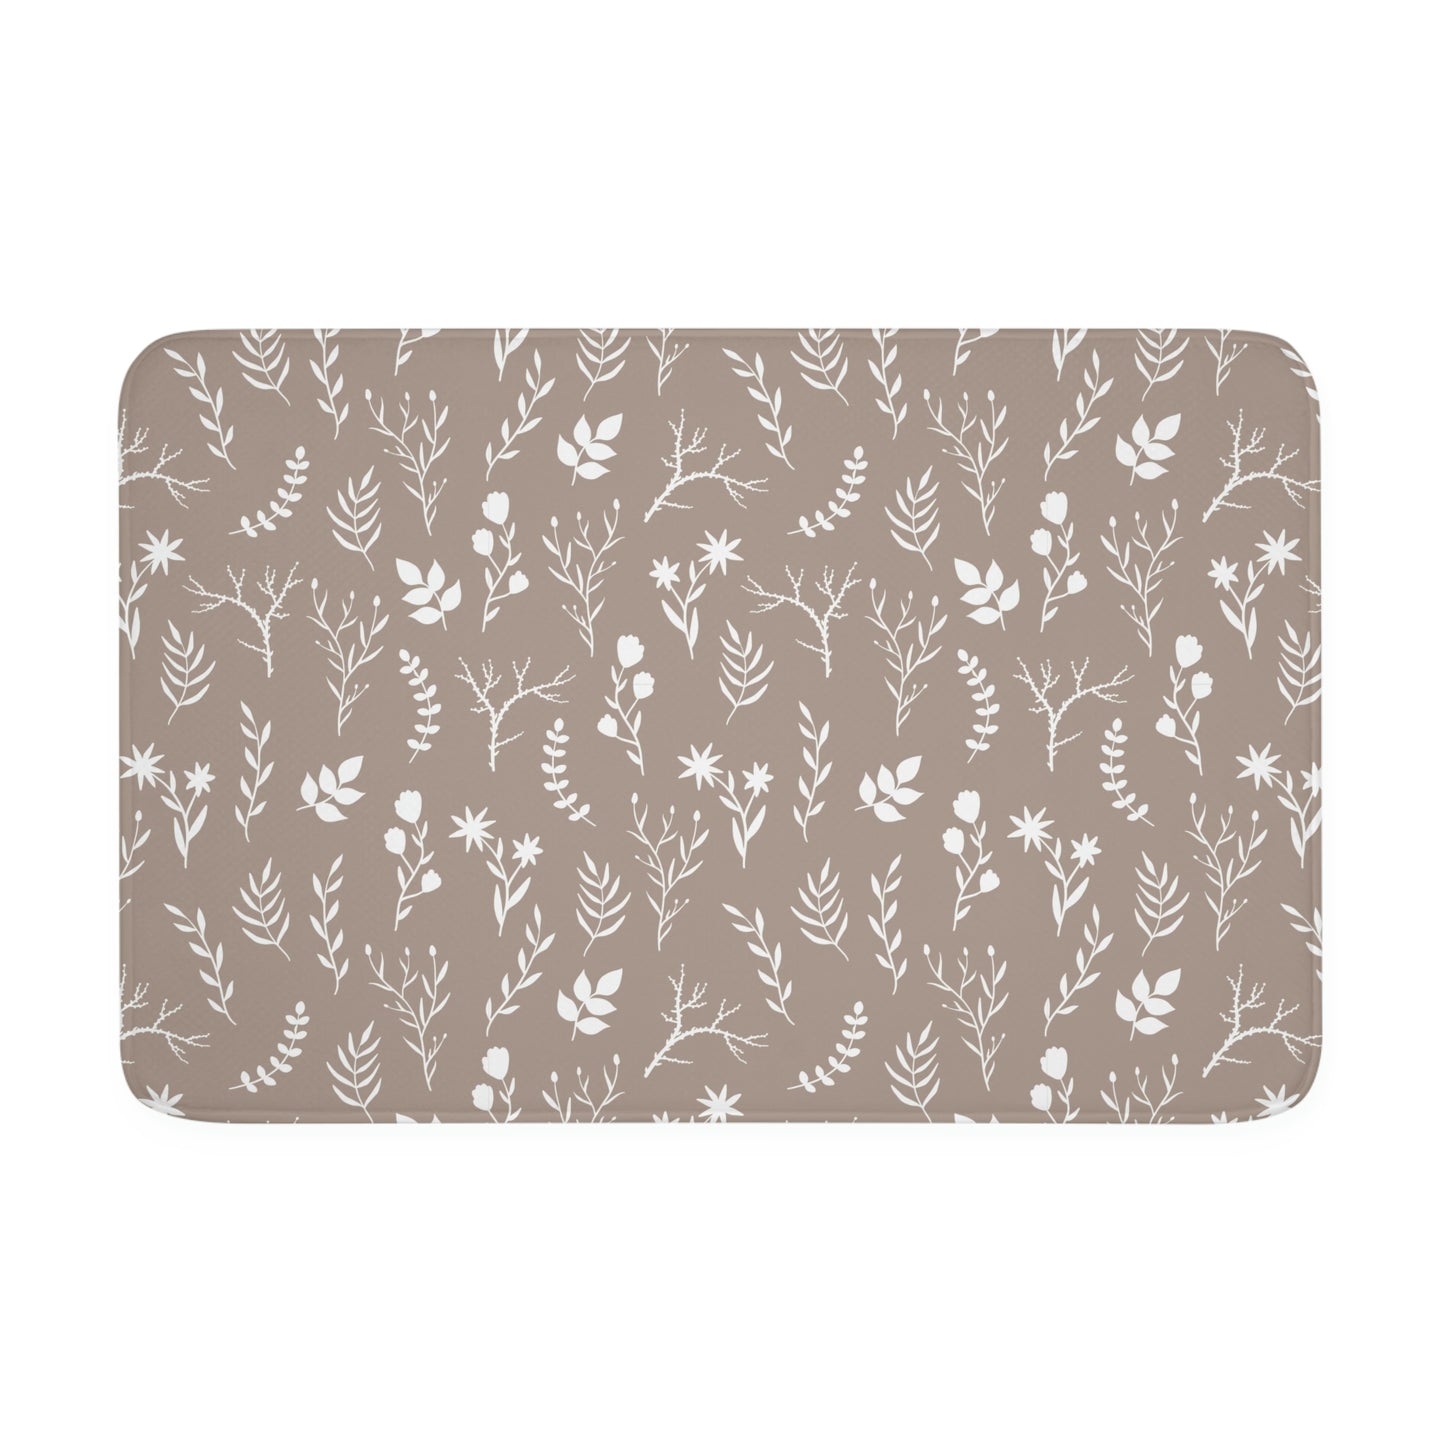 White and Taupe Floral Print Bathmat | Washable Anti-slip Floral Bathmat